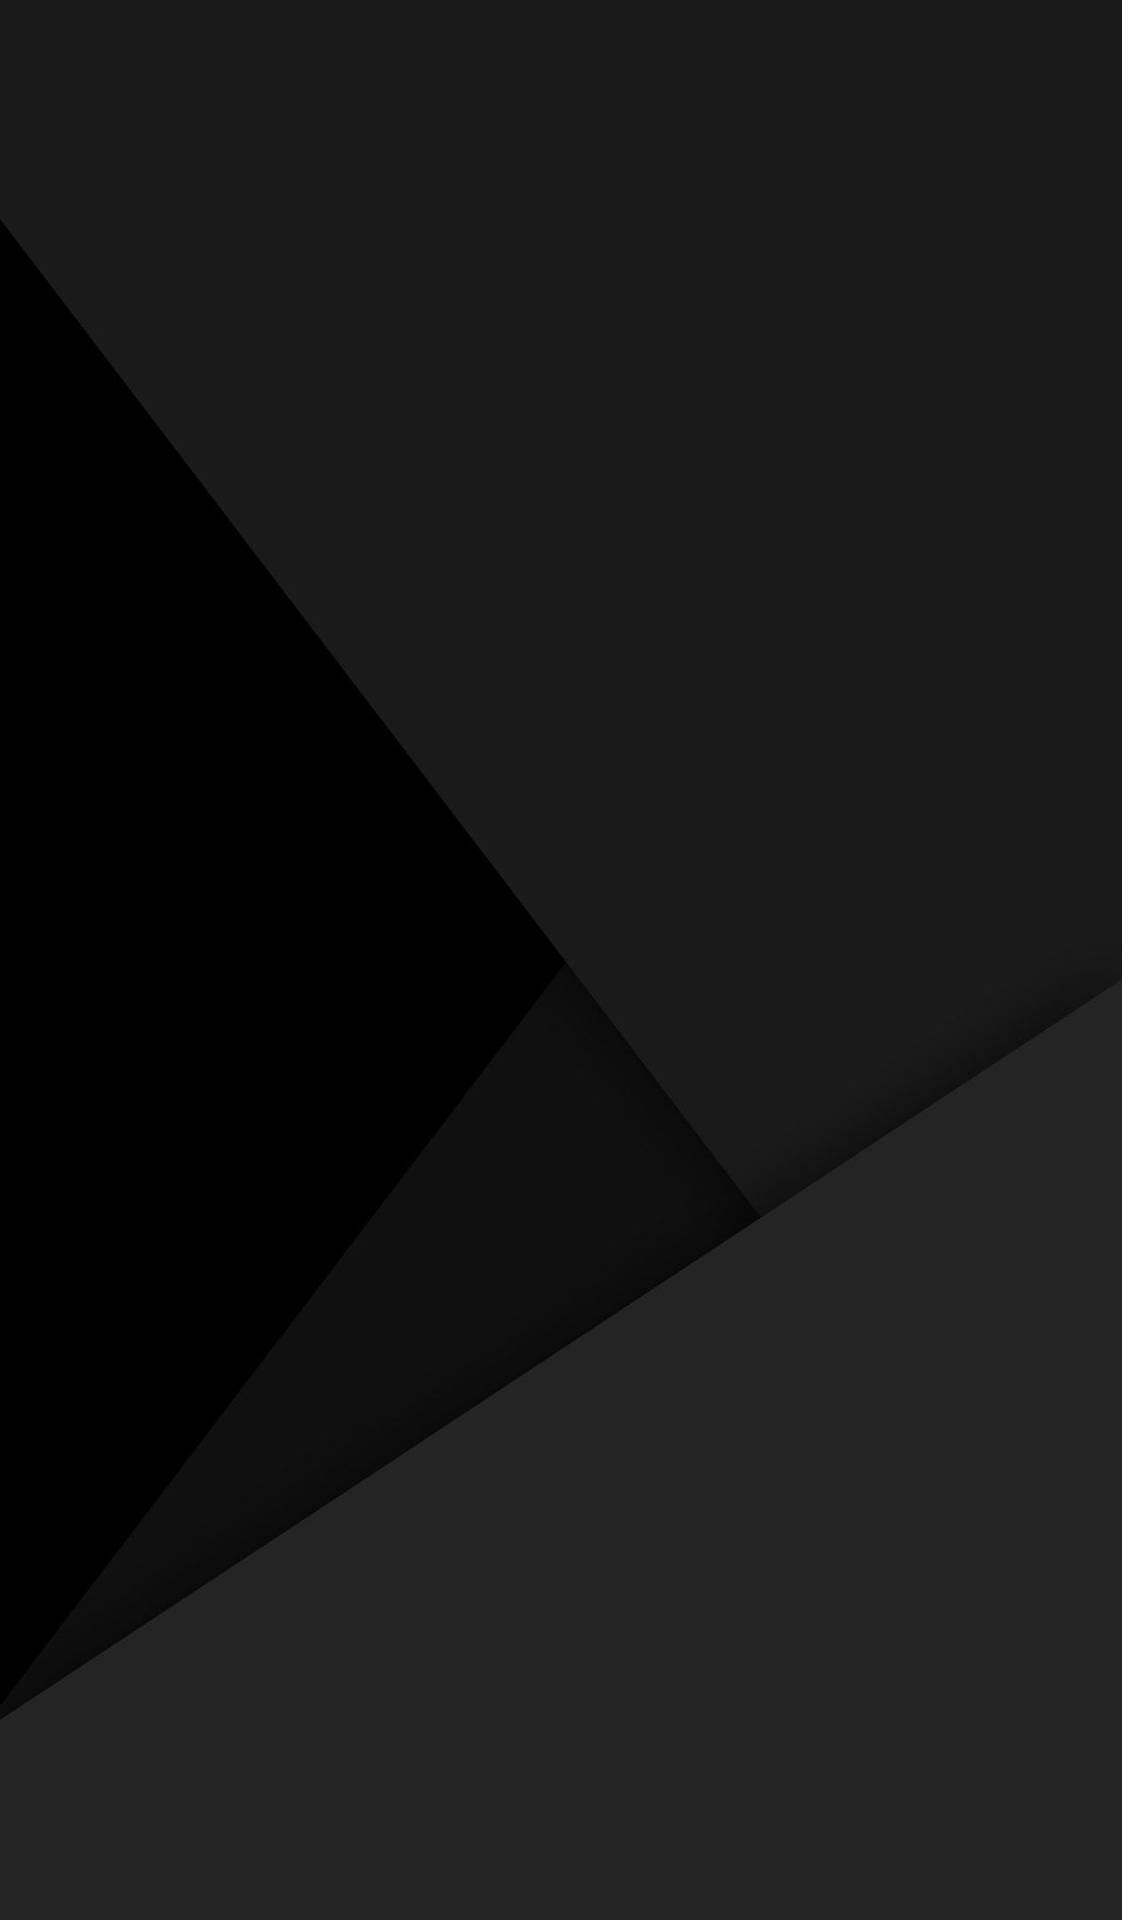 Solid Black 4k Geometric Shapes